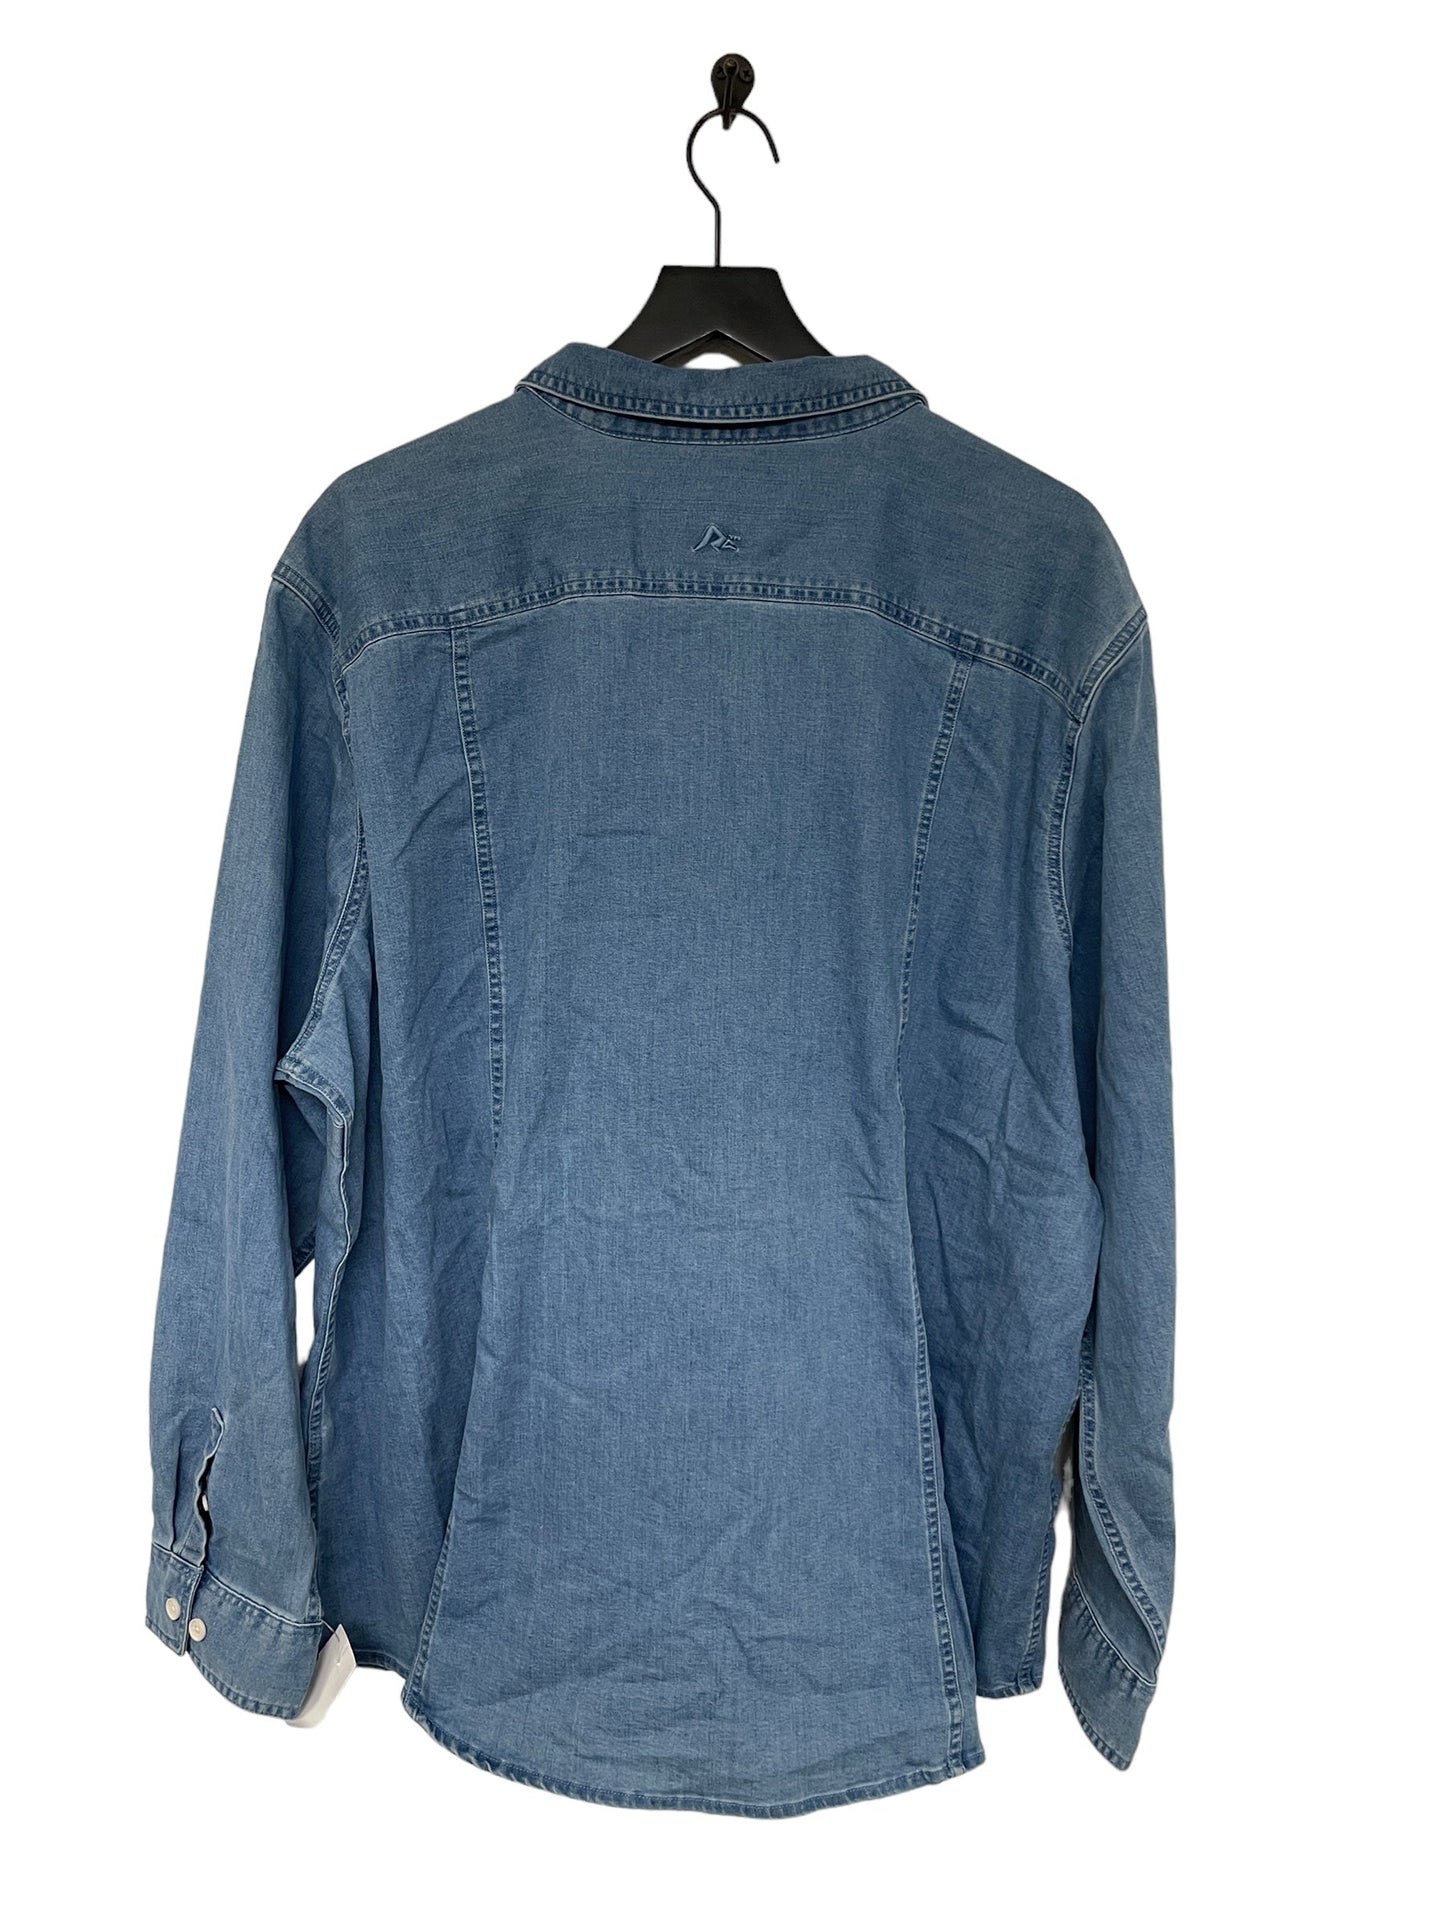 Blue Denim Blouse Long Sleeve Clothes Mentor, Size 3x